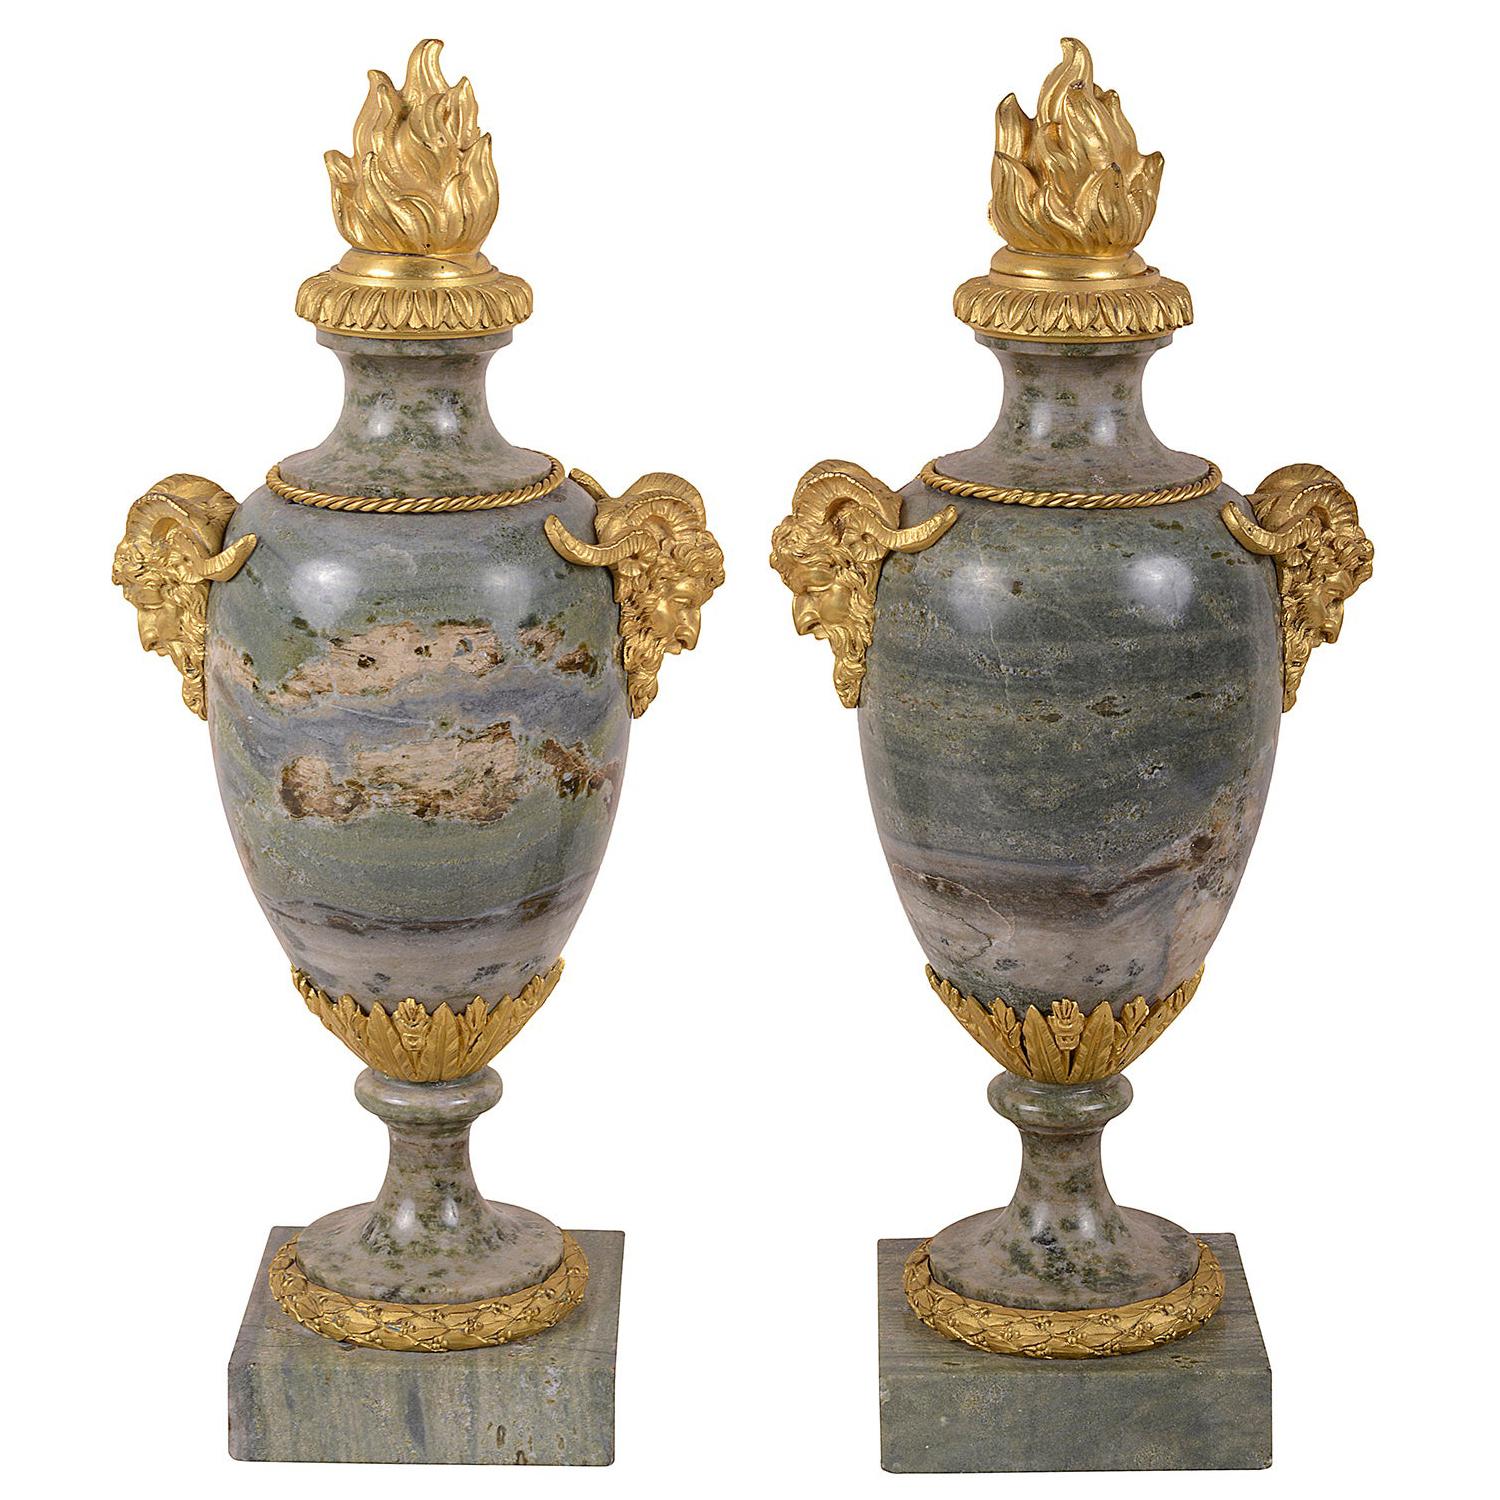 Pair of 19th Century Marble and Ormolu Vases, Louis XVI Style